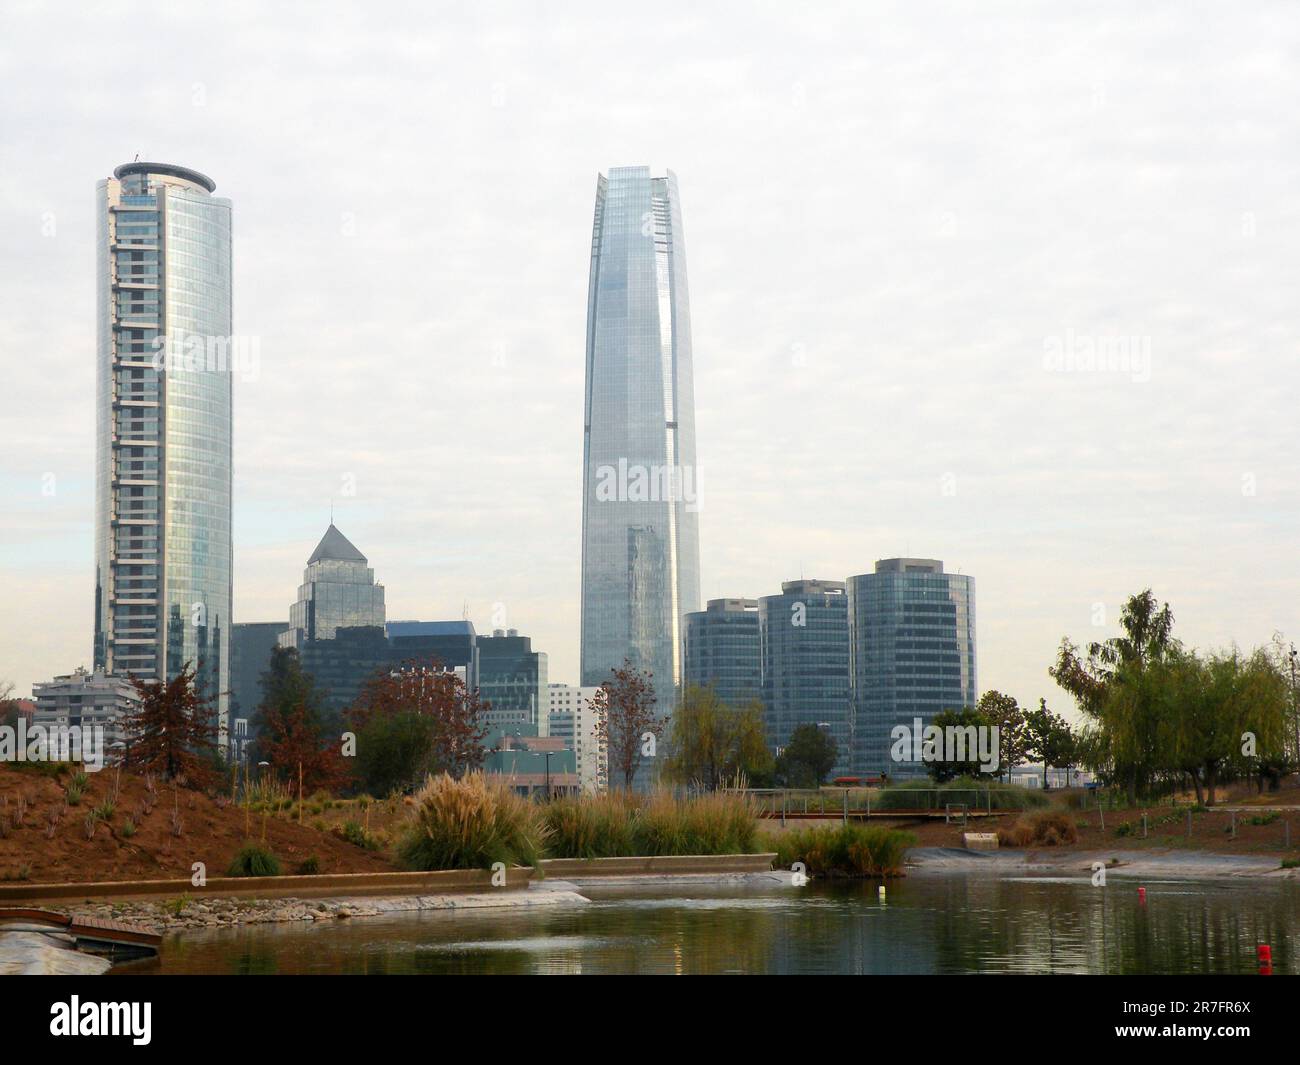 Bicentennial Park and business buildings, Santiago, Chile Stock Photo